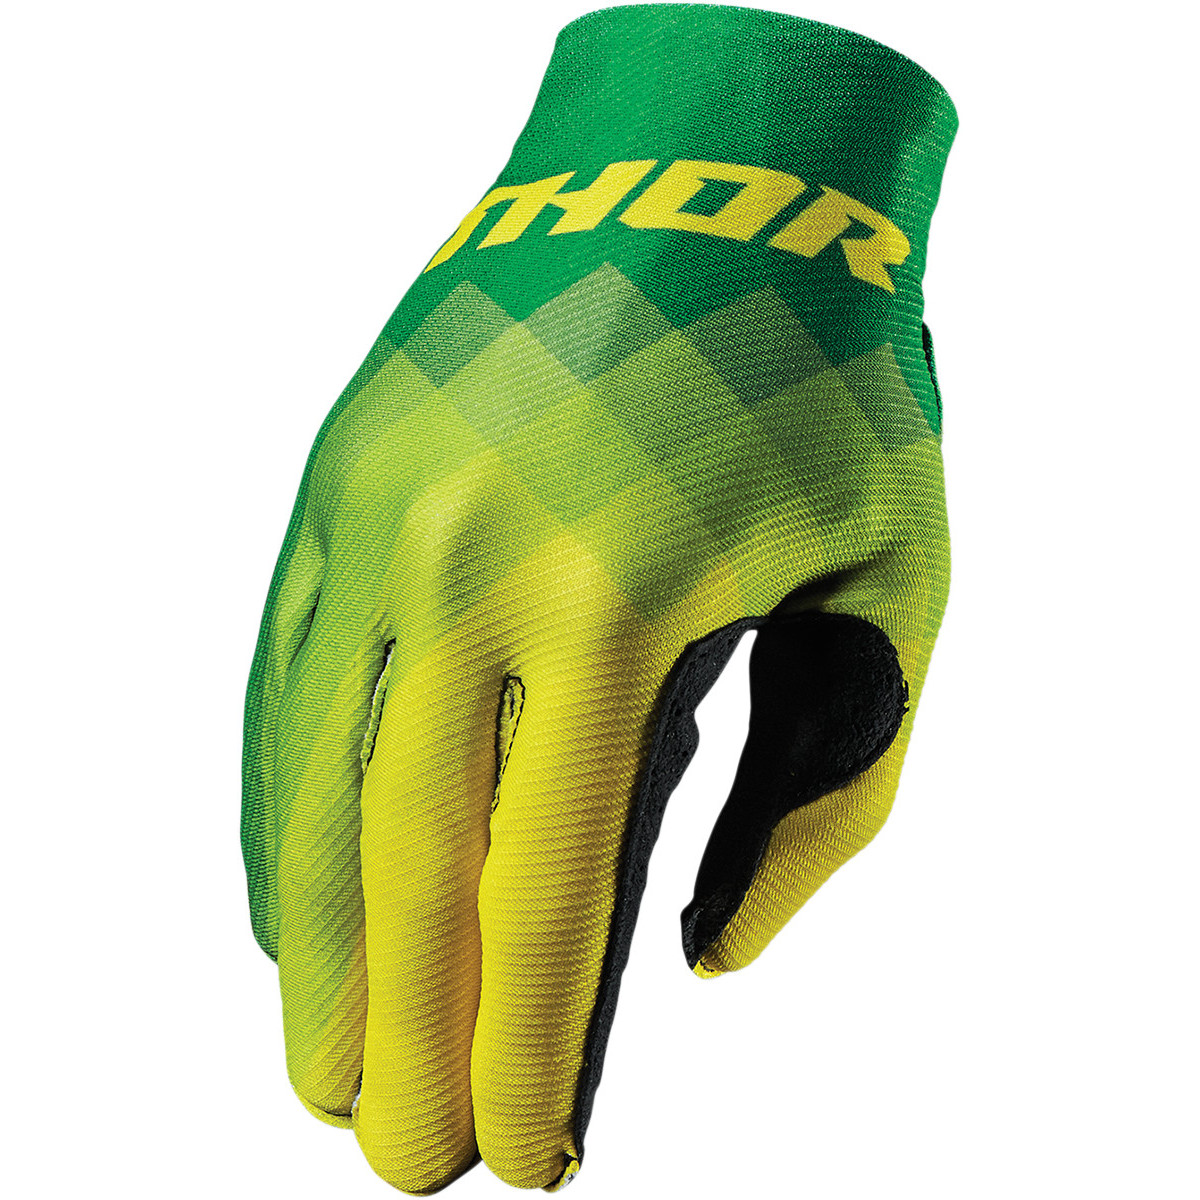 Thor Gloves Invert Pix - Green/Yellow